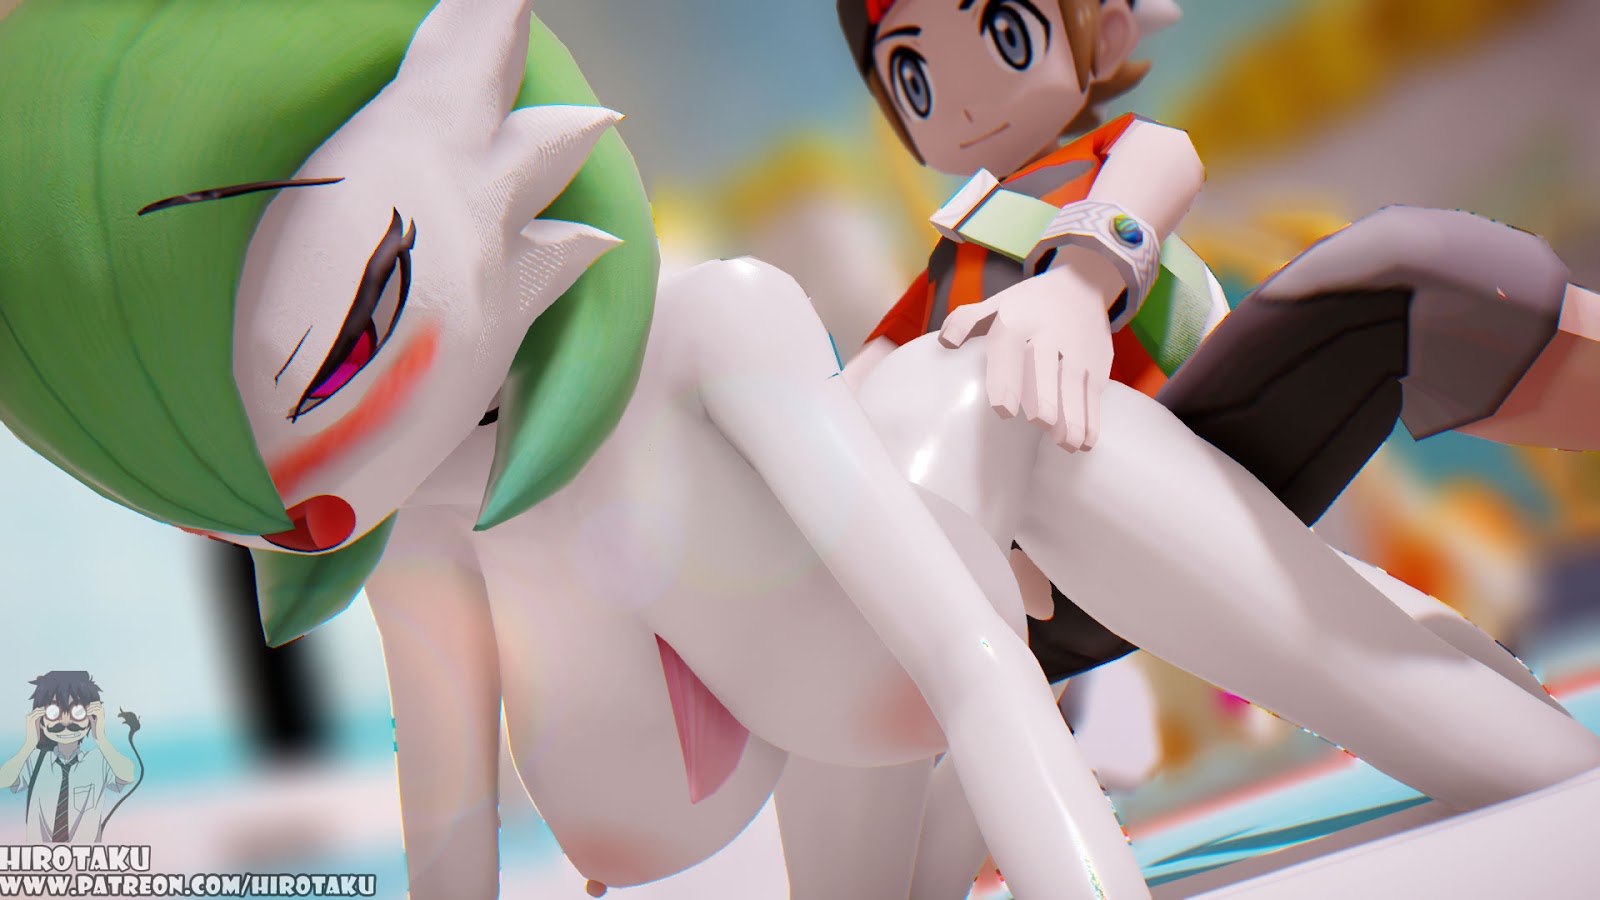 Pokemon【Sex fighting 】Hentai Video - Hirotaku: Anime 3D Video and Game  designer +18 NSFW